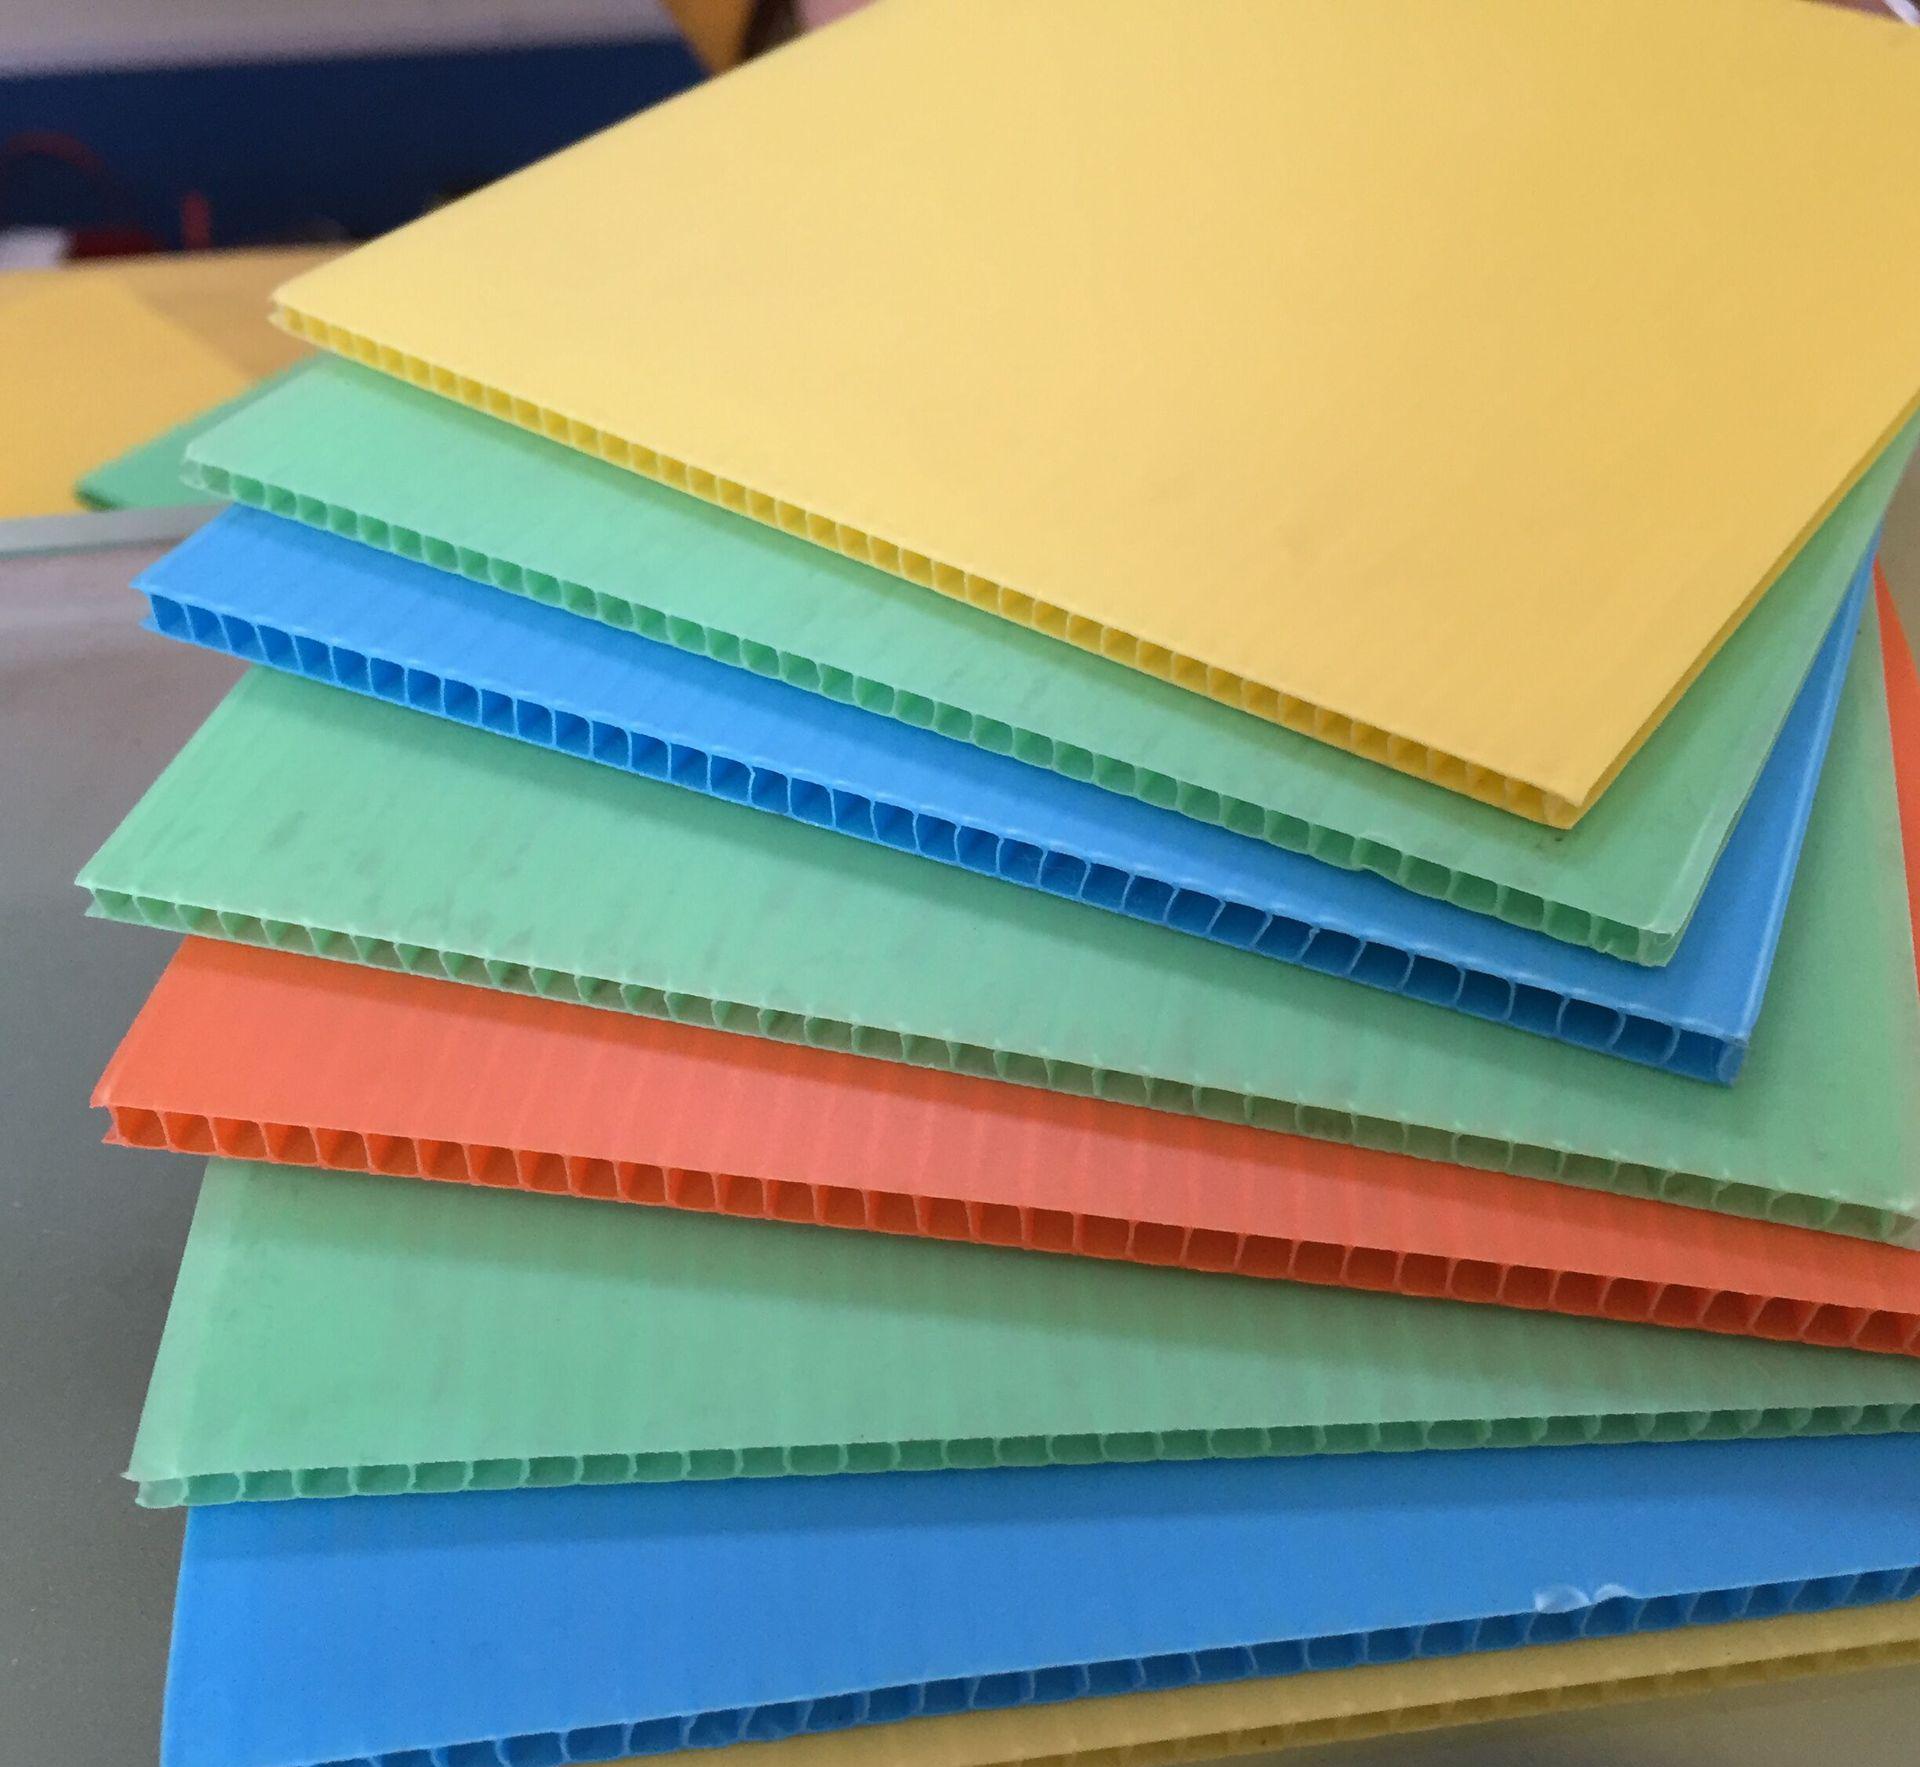 PP中空板是代替纸板、木板和瓦楞板等理想的环保材料